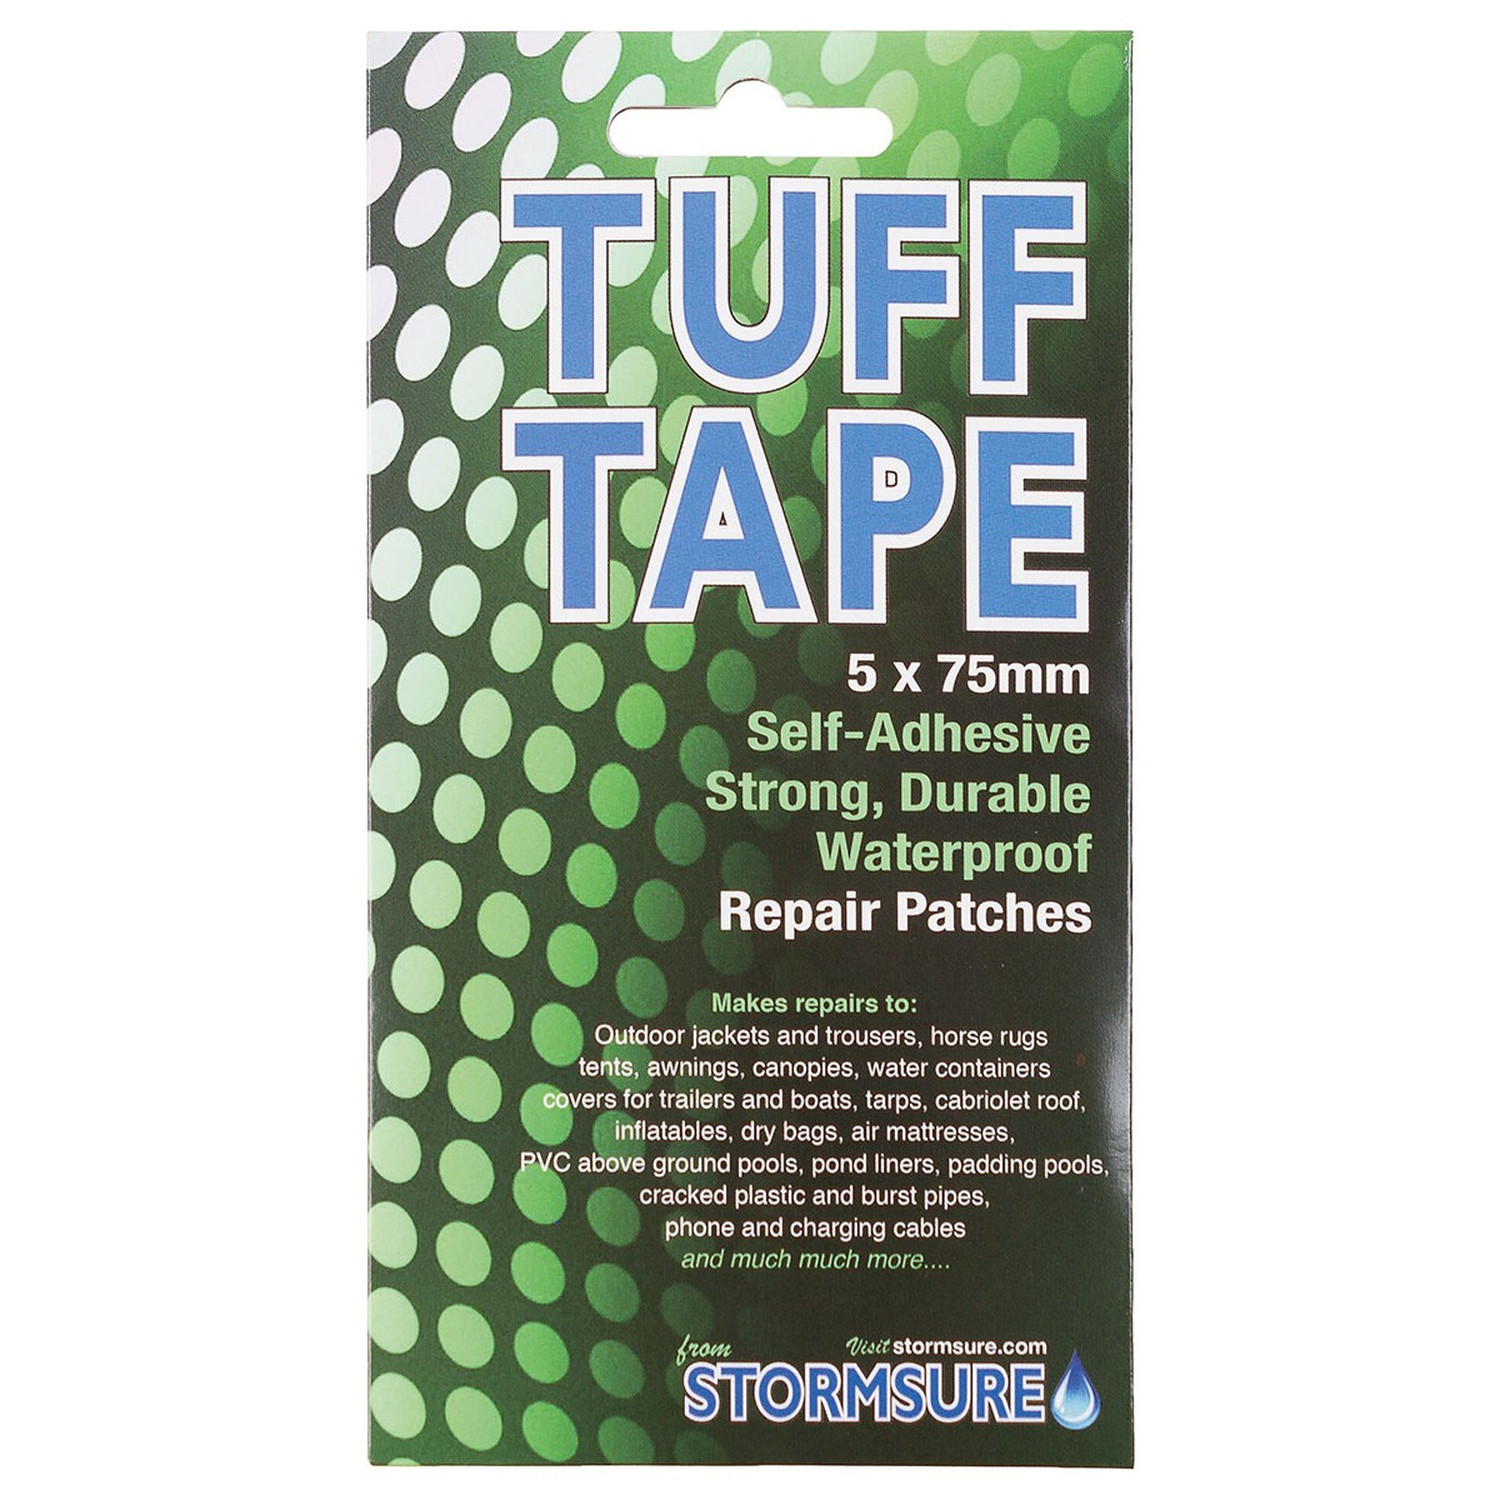 Stormsure Tuff Tape: 5 Patches à 75 mm Durchmesser